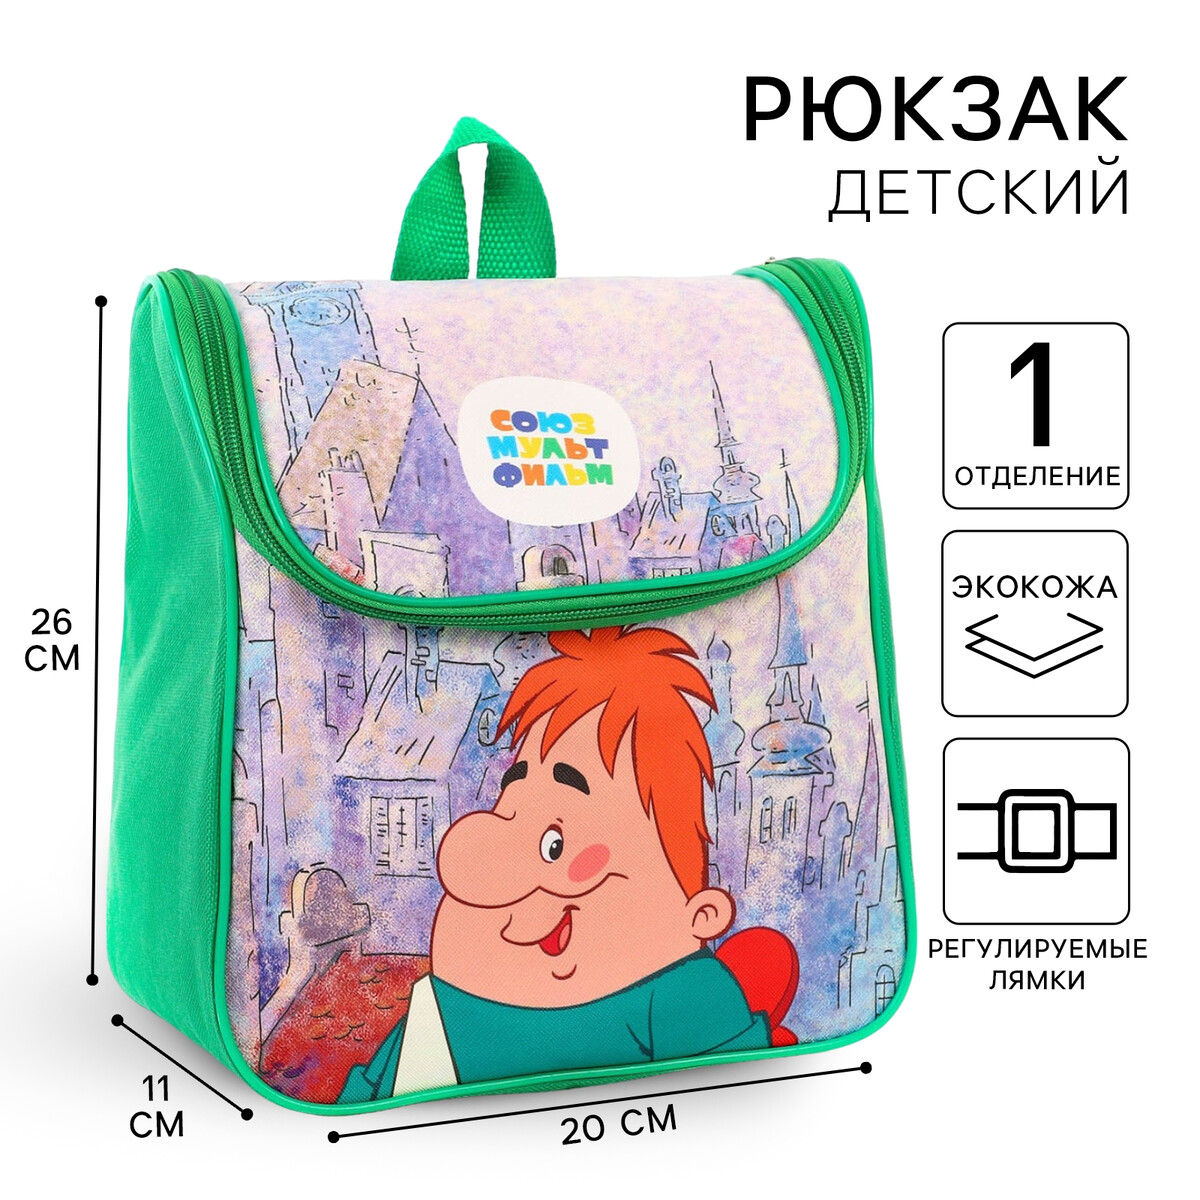 Рюкзак детский на молнии сверху, текстиль, 20 см х 11 см х 26 см